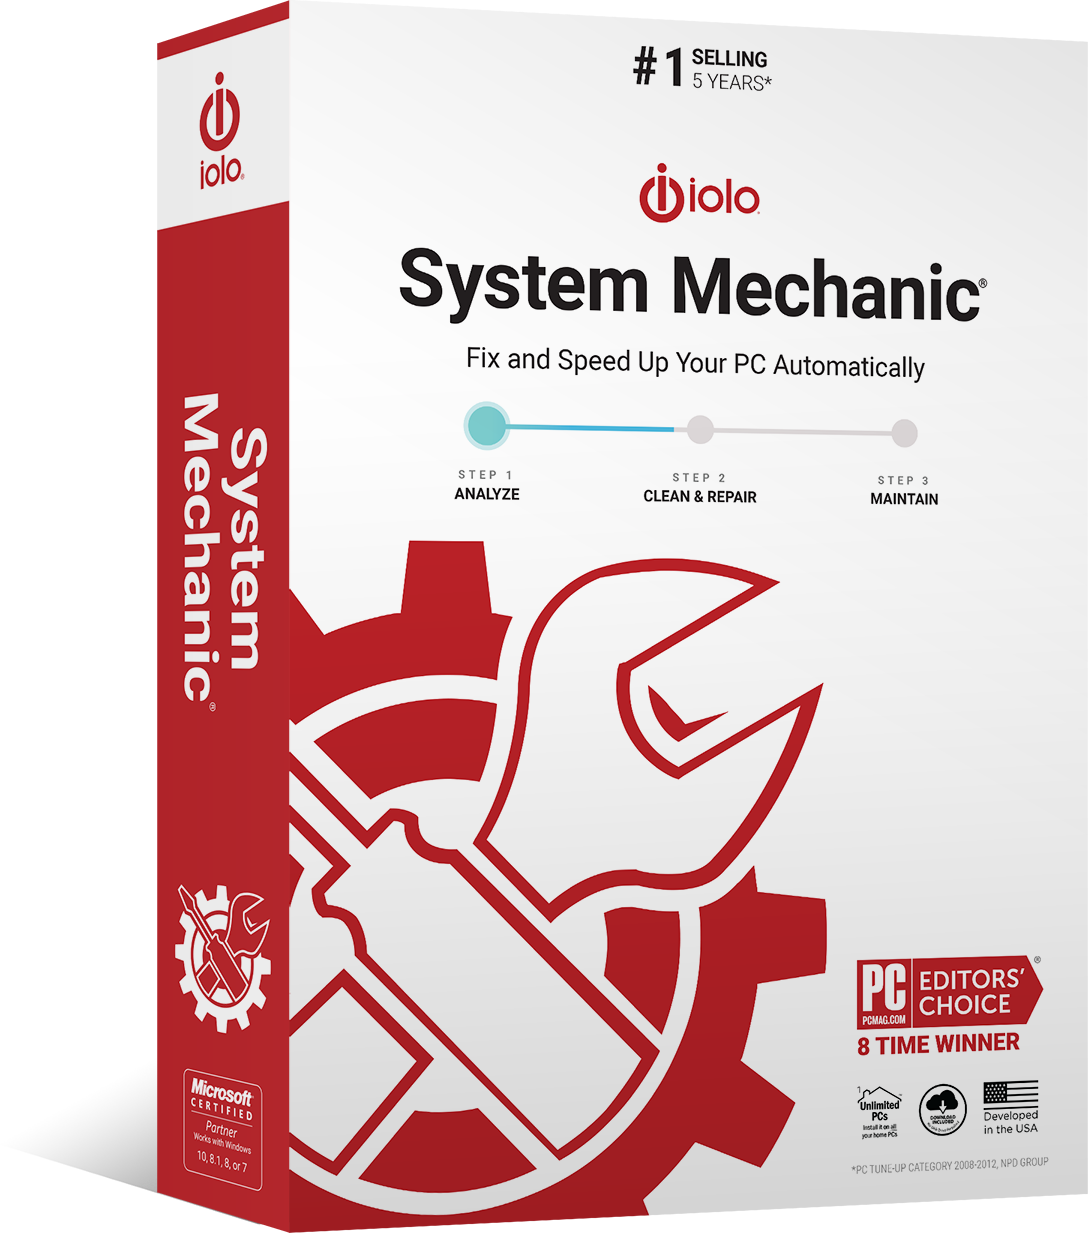 System Mechanic Pro